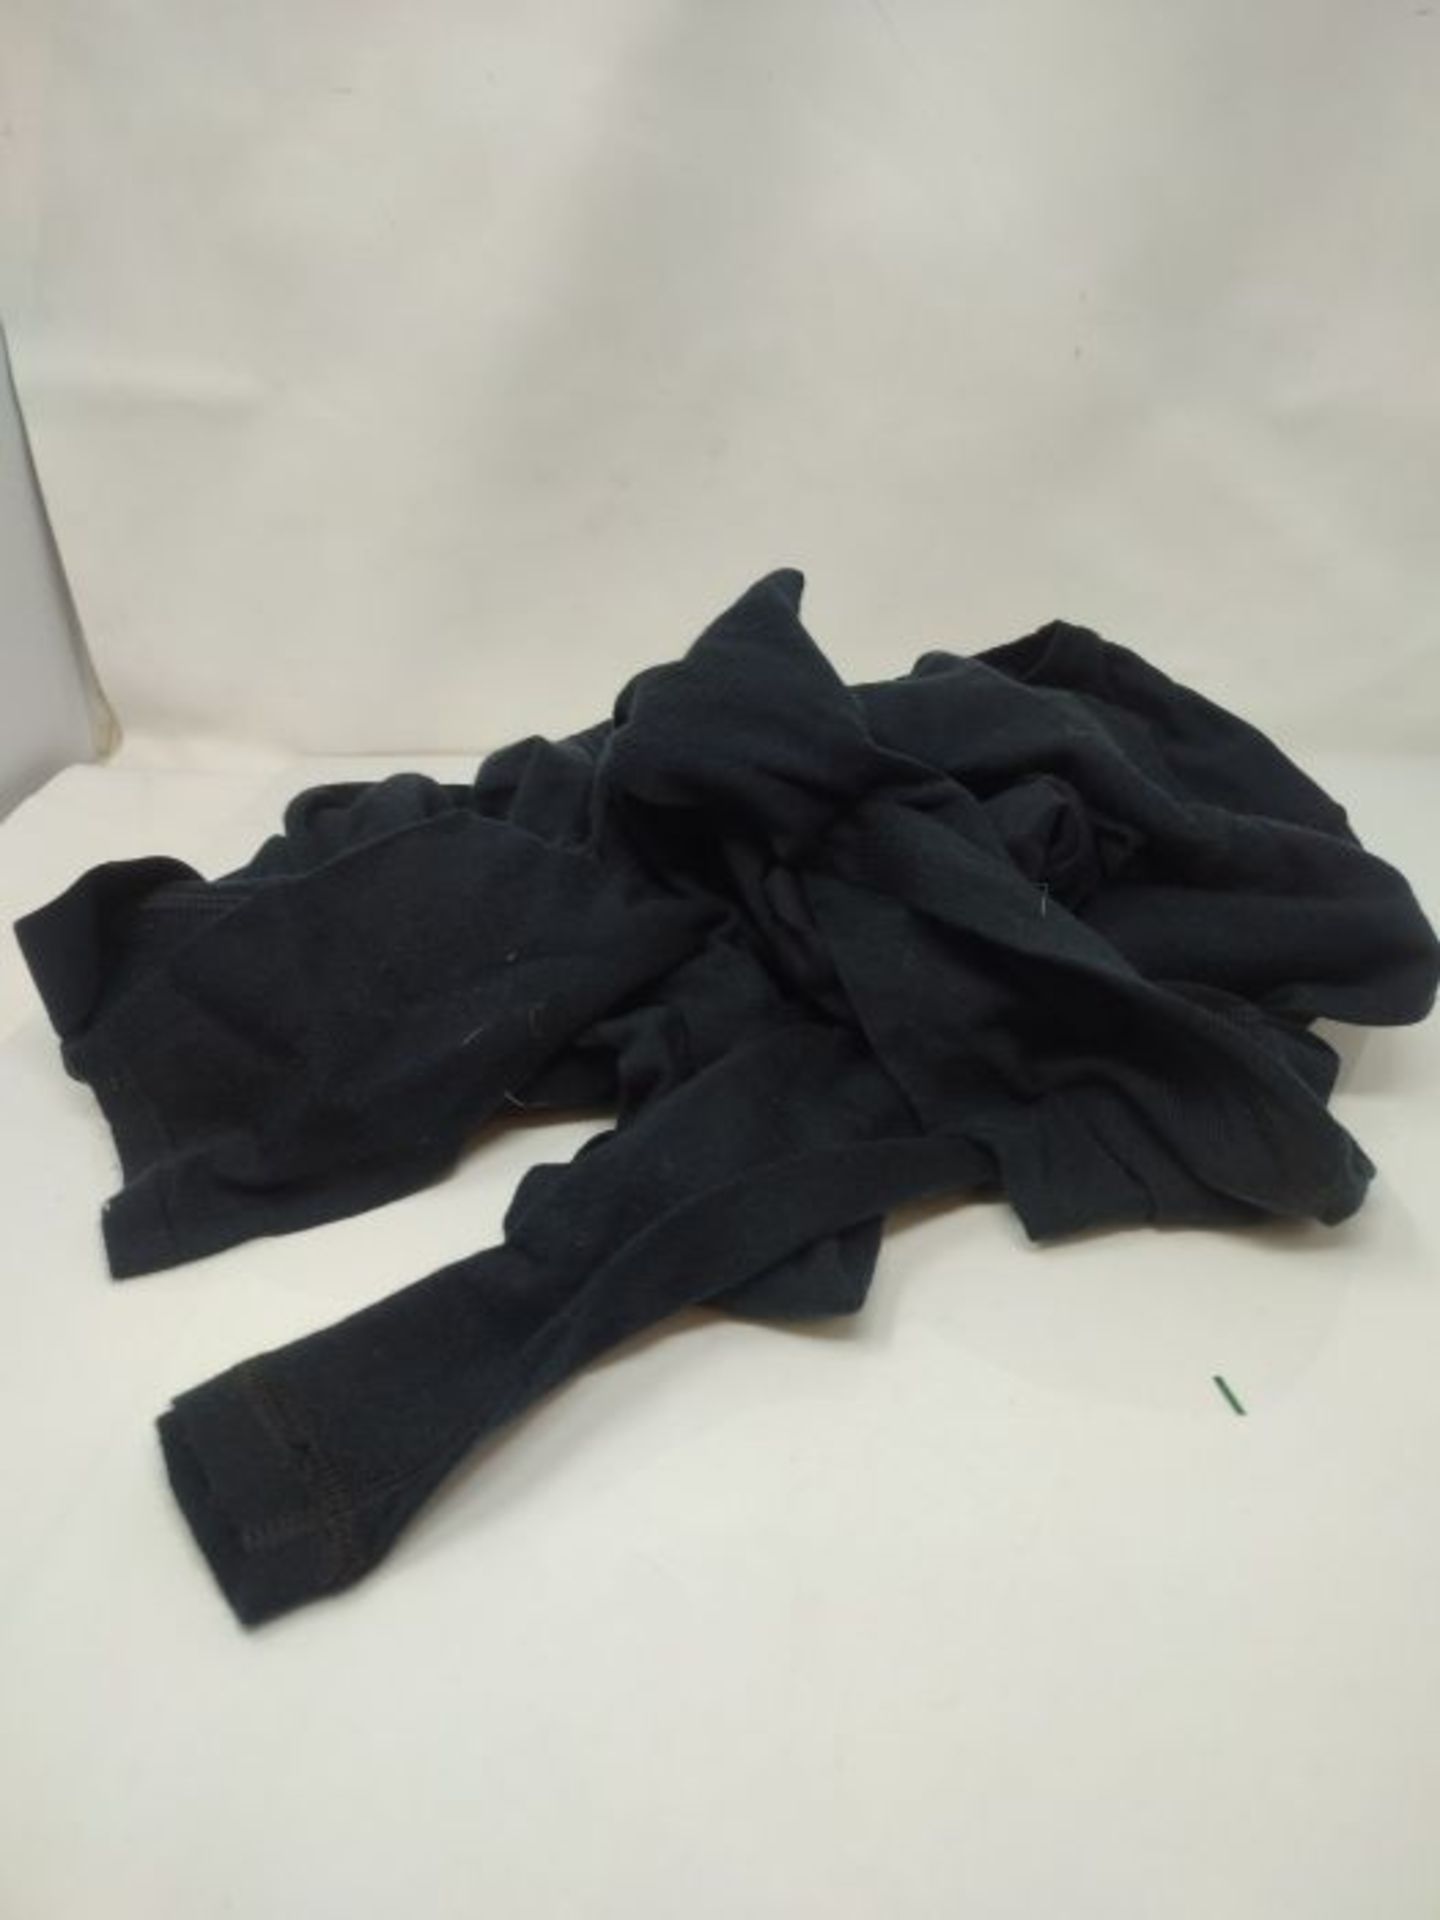 RRP £55.00 DANISH ENDURANCE Men's Merino Baselayer Set (LS Shirt + Tights) S Black 1-Pack - Image 3 of 3